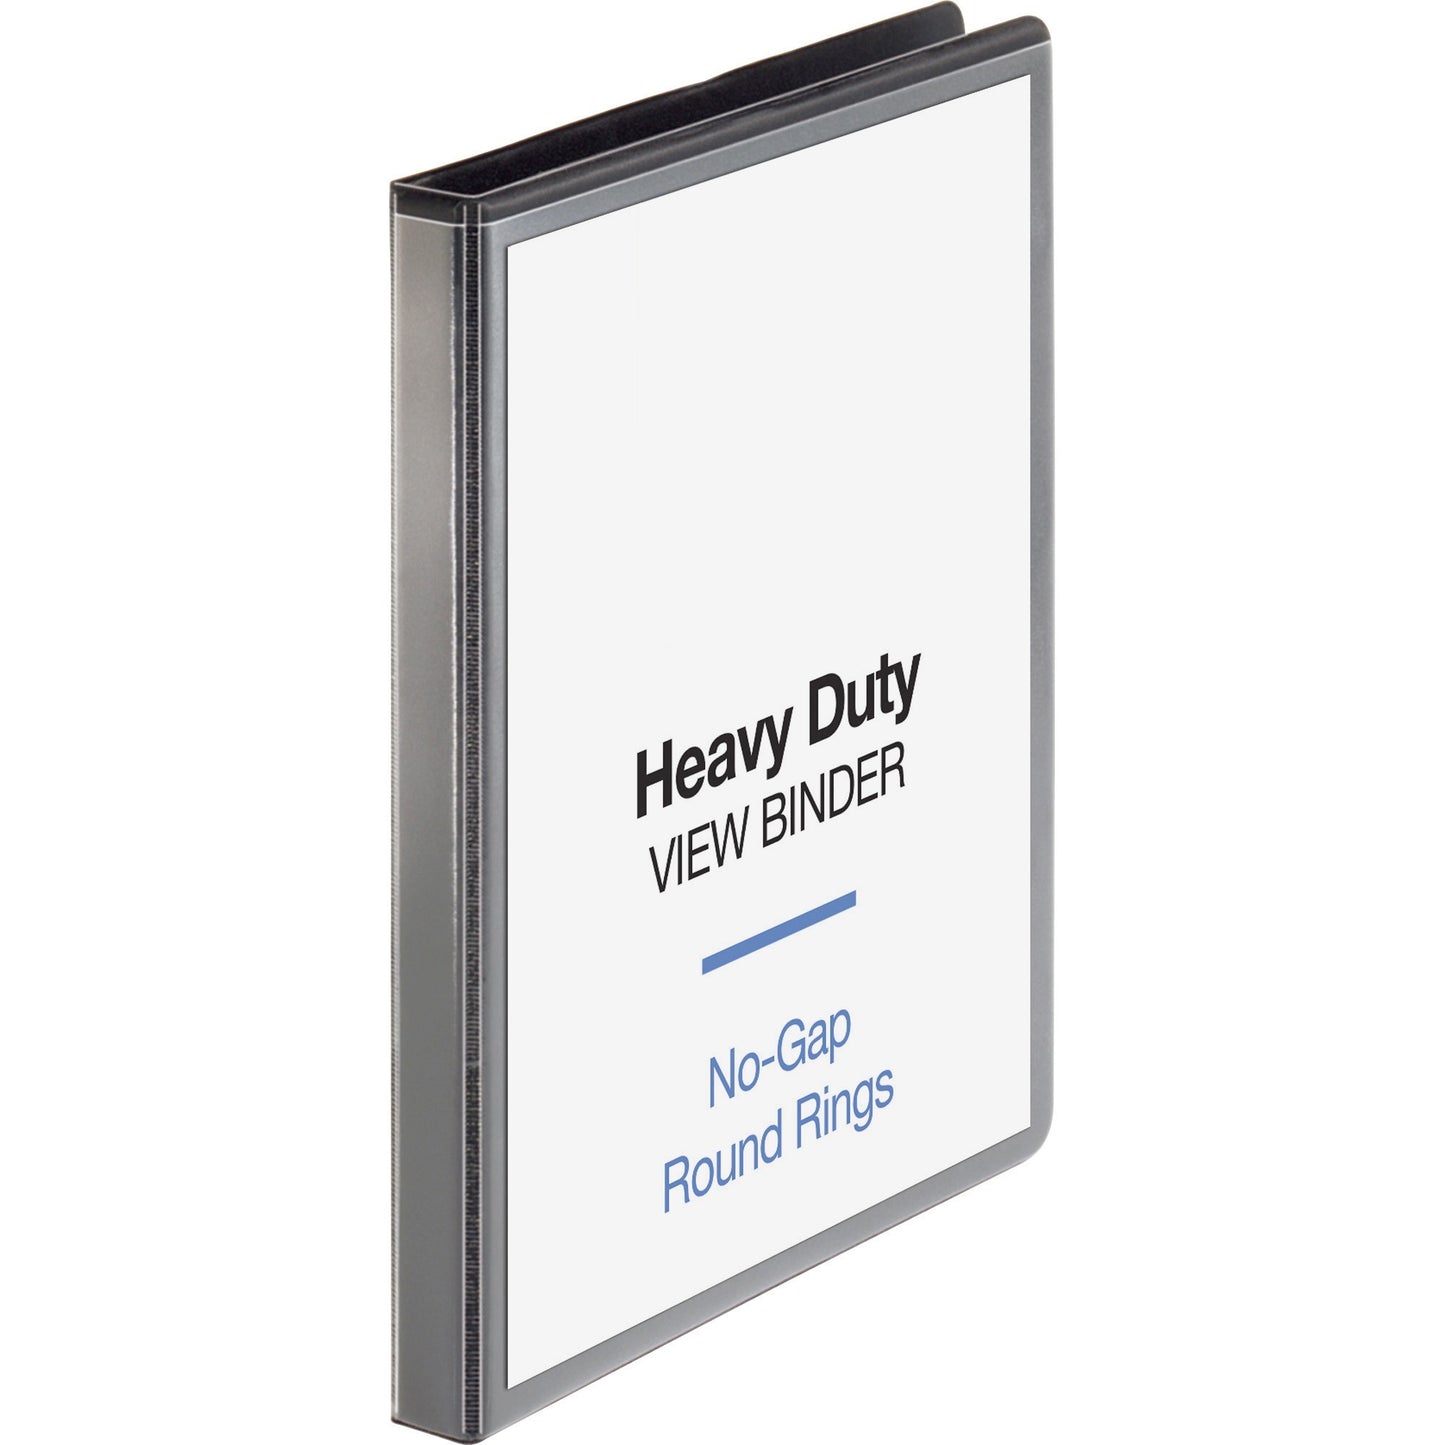 Business Source Heavy-duty View Binder